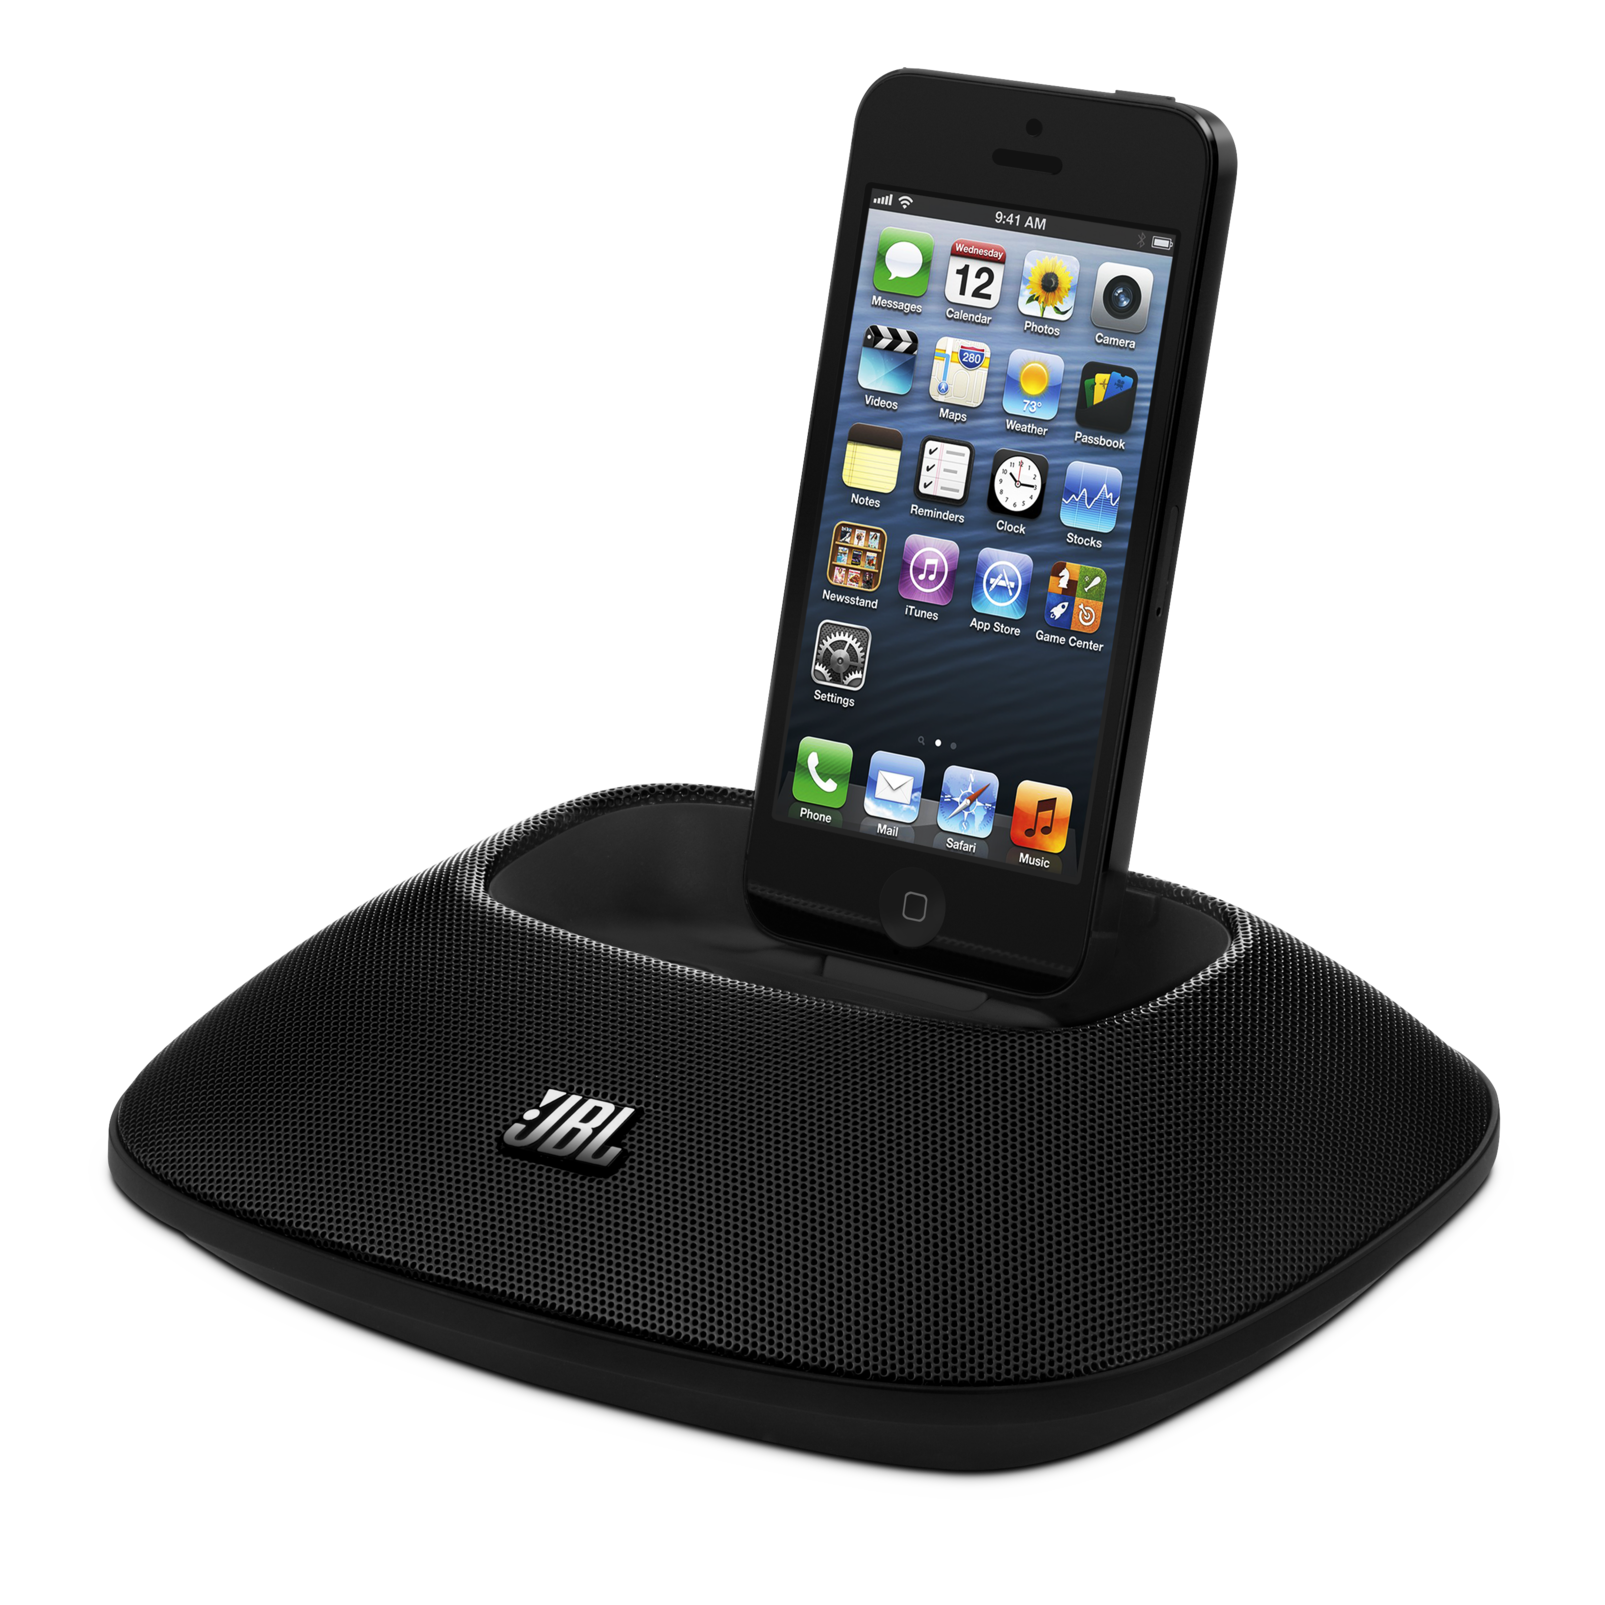 OnBeat Micro | Award-winning Portable Speaker Dock for iPhone 5